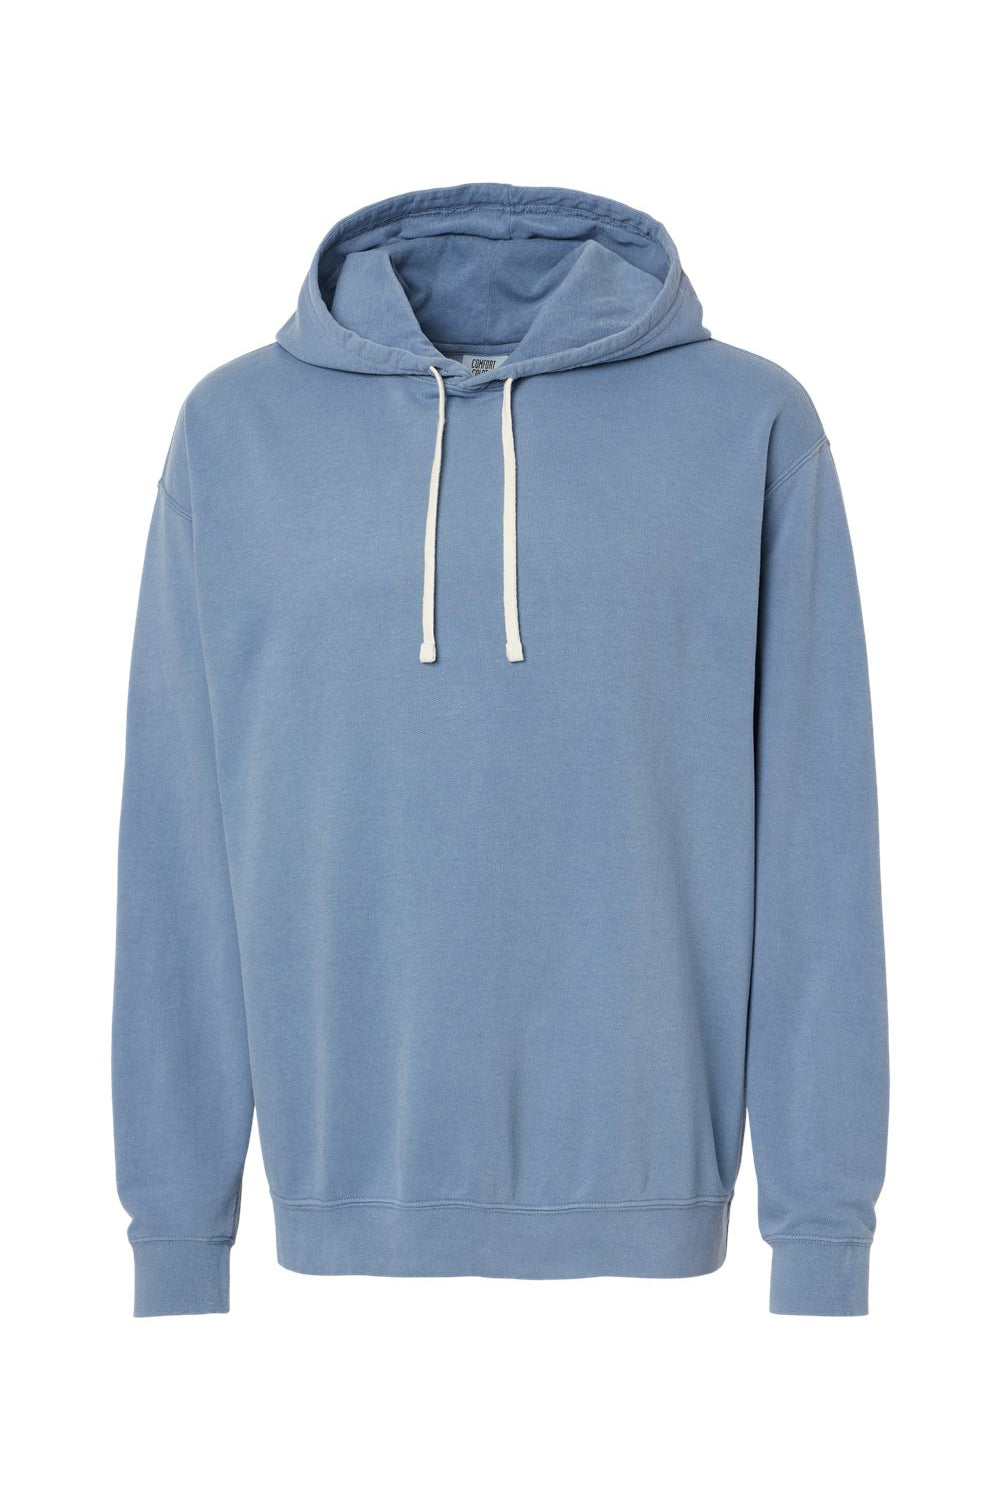 Comfort Colors 1467 Mens Garment Dyed Fleece Hooded Sweatshirt Hoodie Blue Jean Flat Front